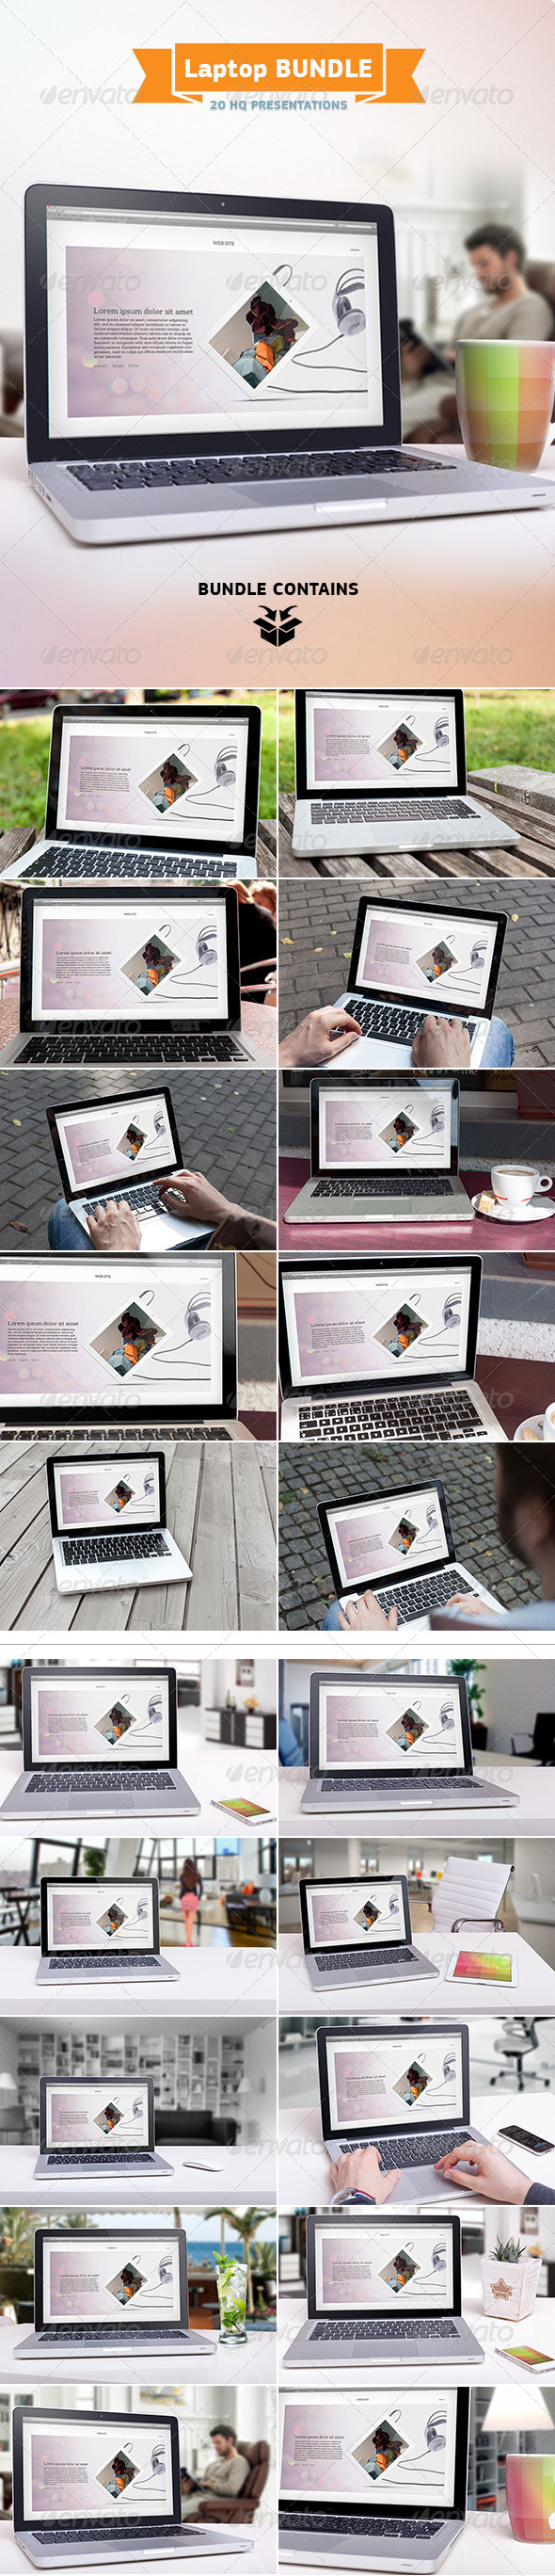 Download Laptop Screen Mockup Bundle by GrafAS | GraphicRiver